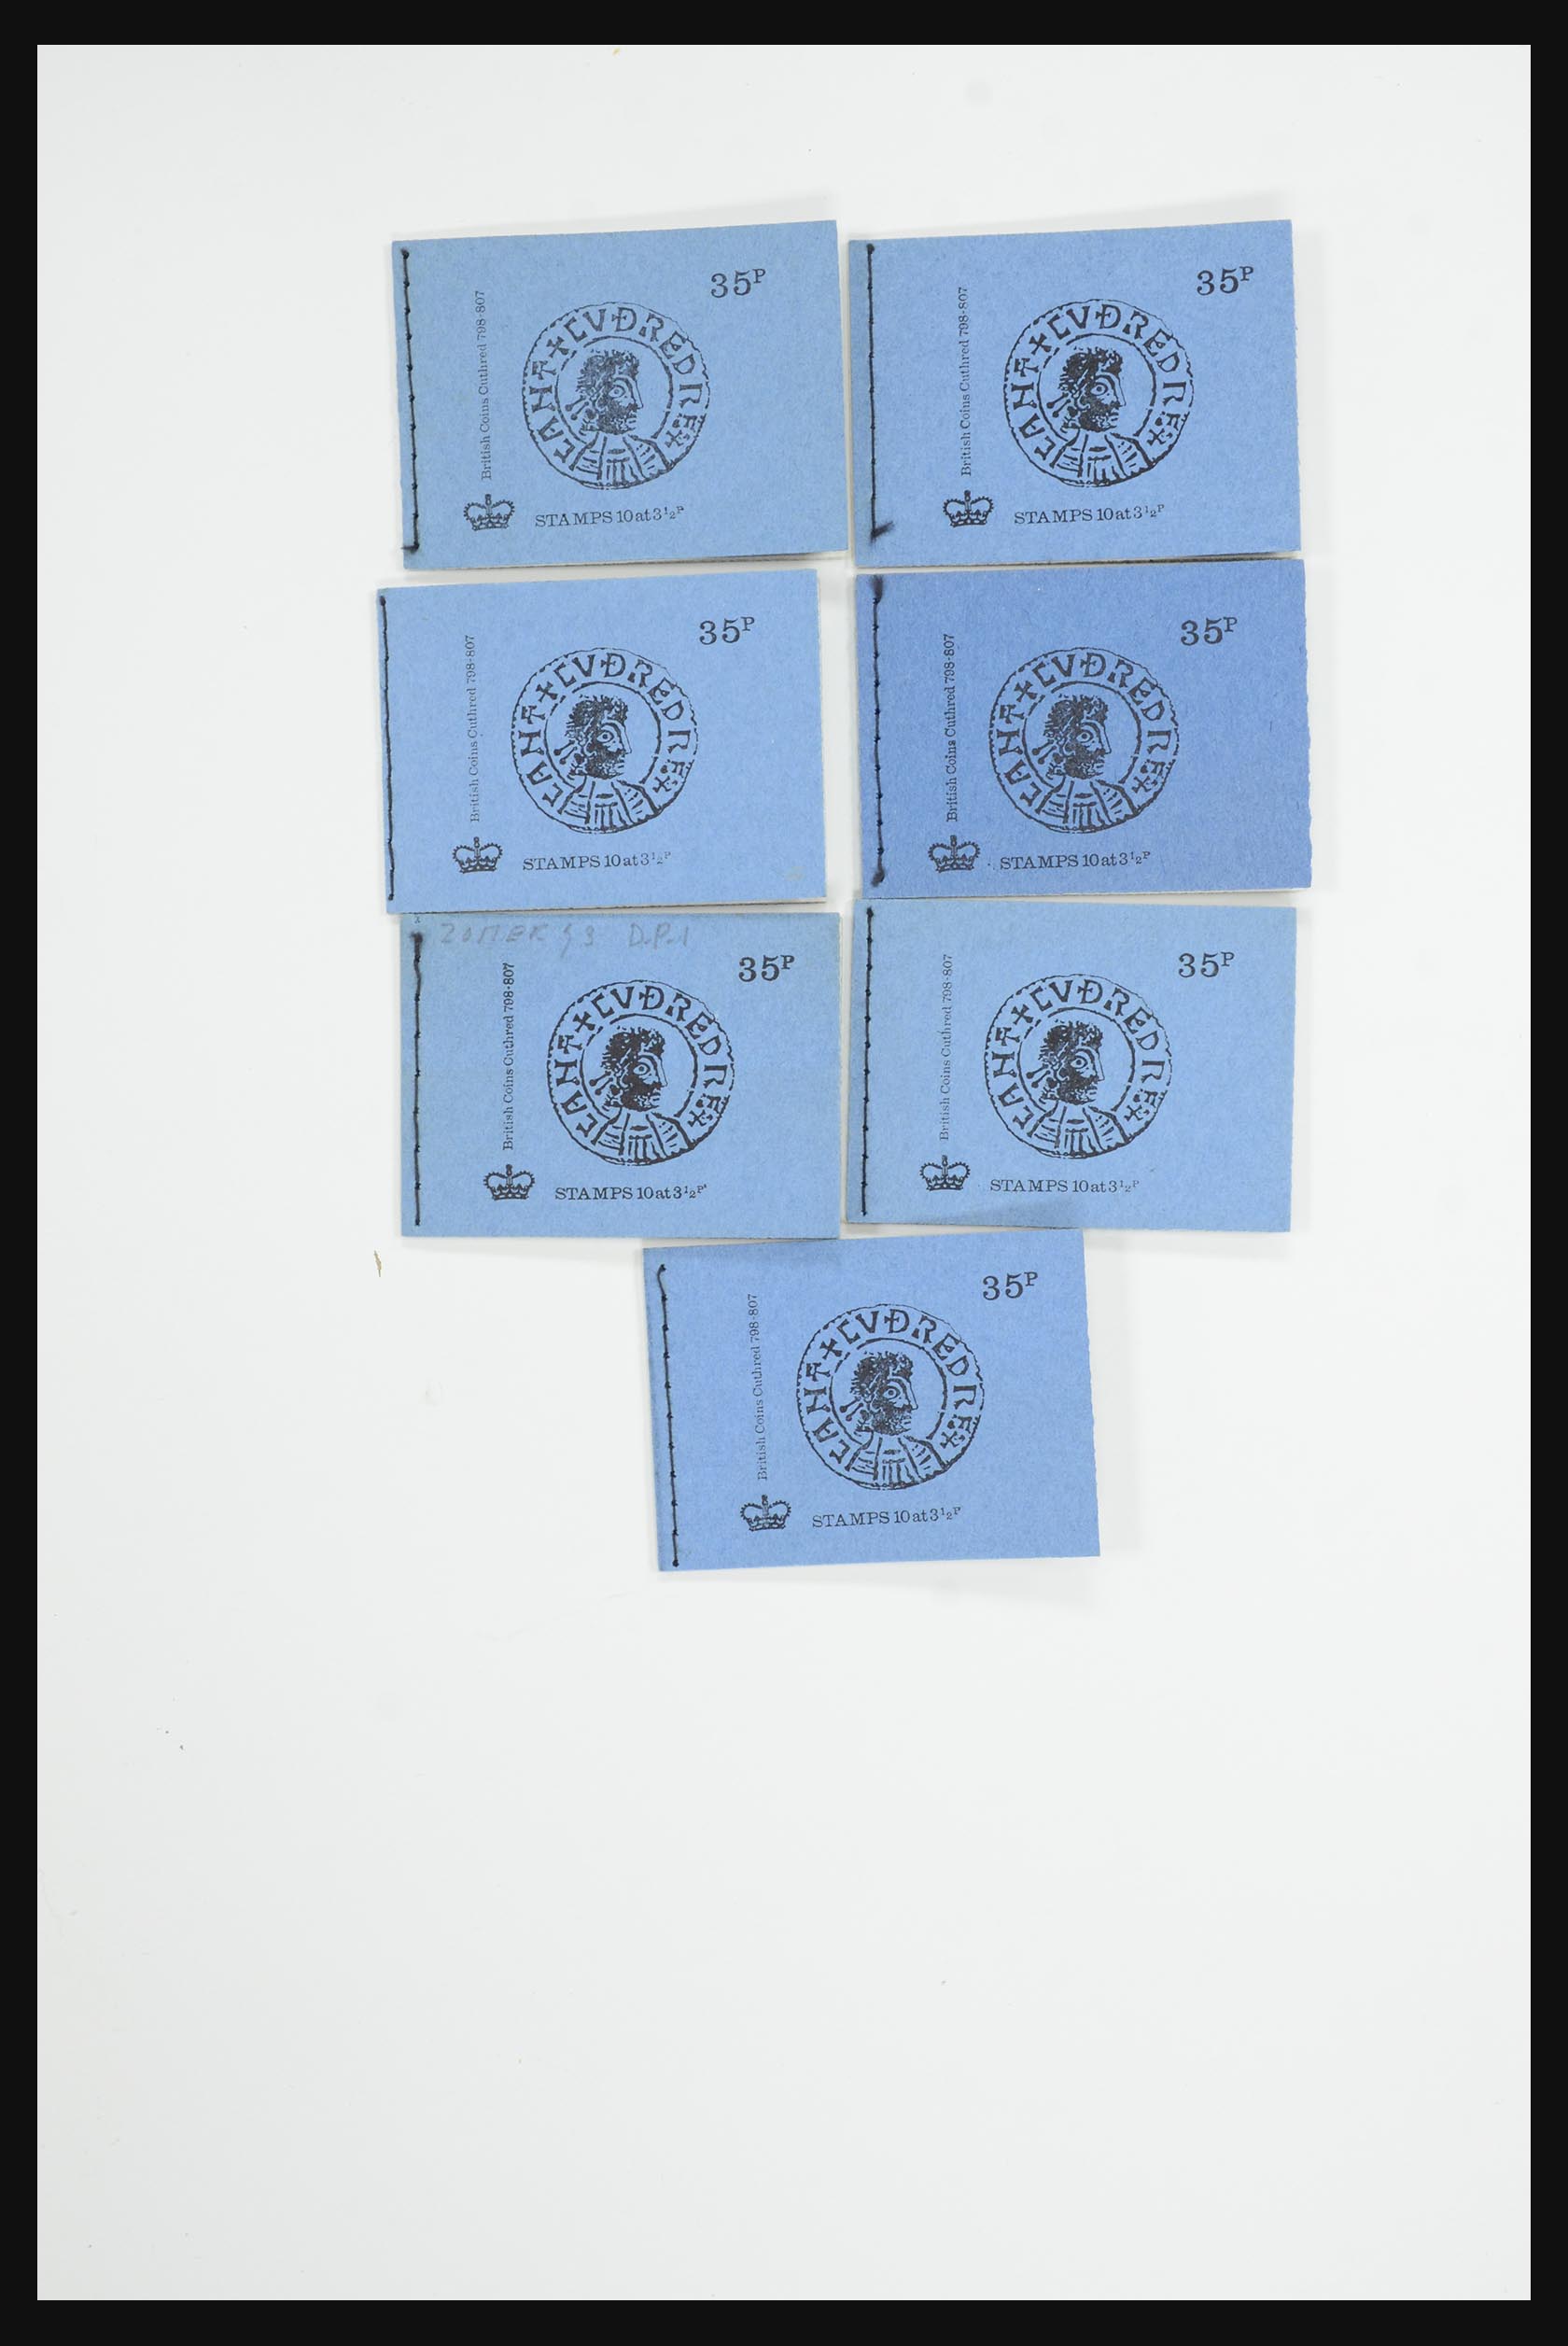 31961 020 - 31961 Great Britain stampbooklets 1971-1999.